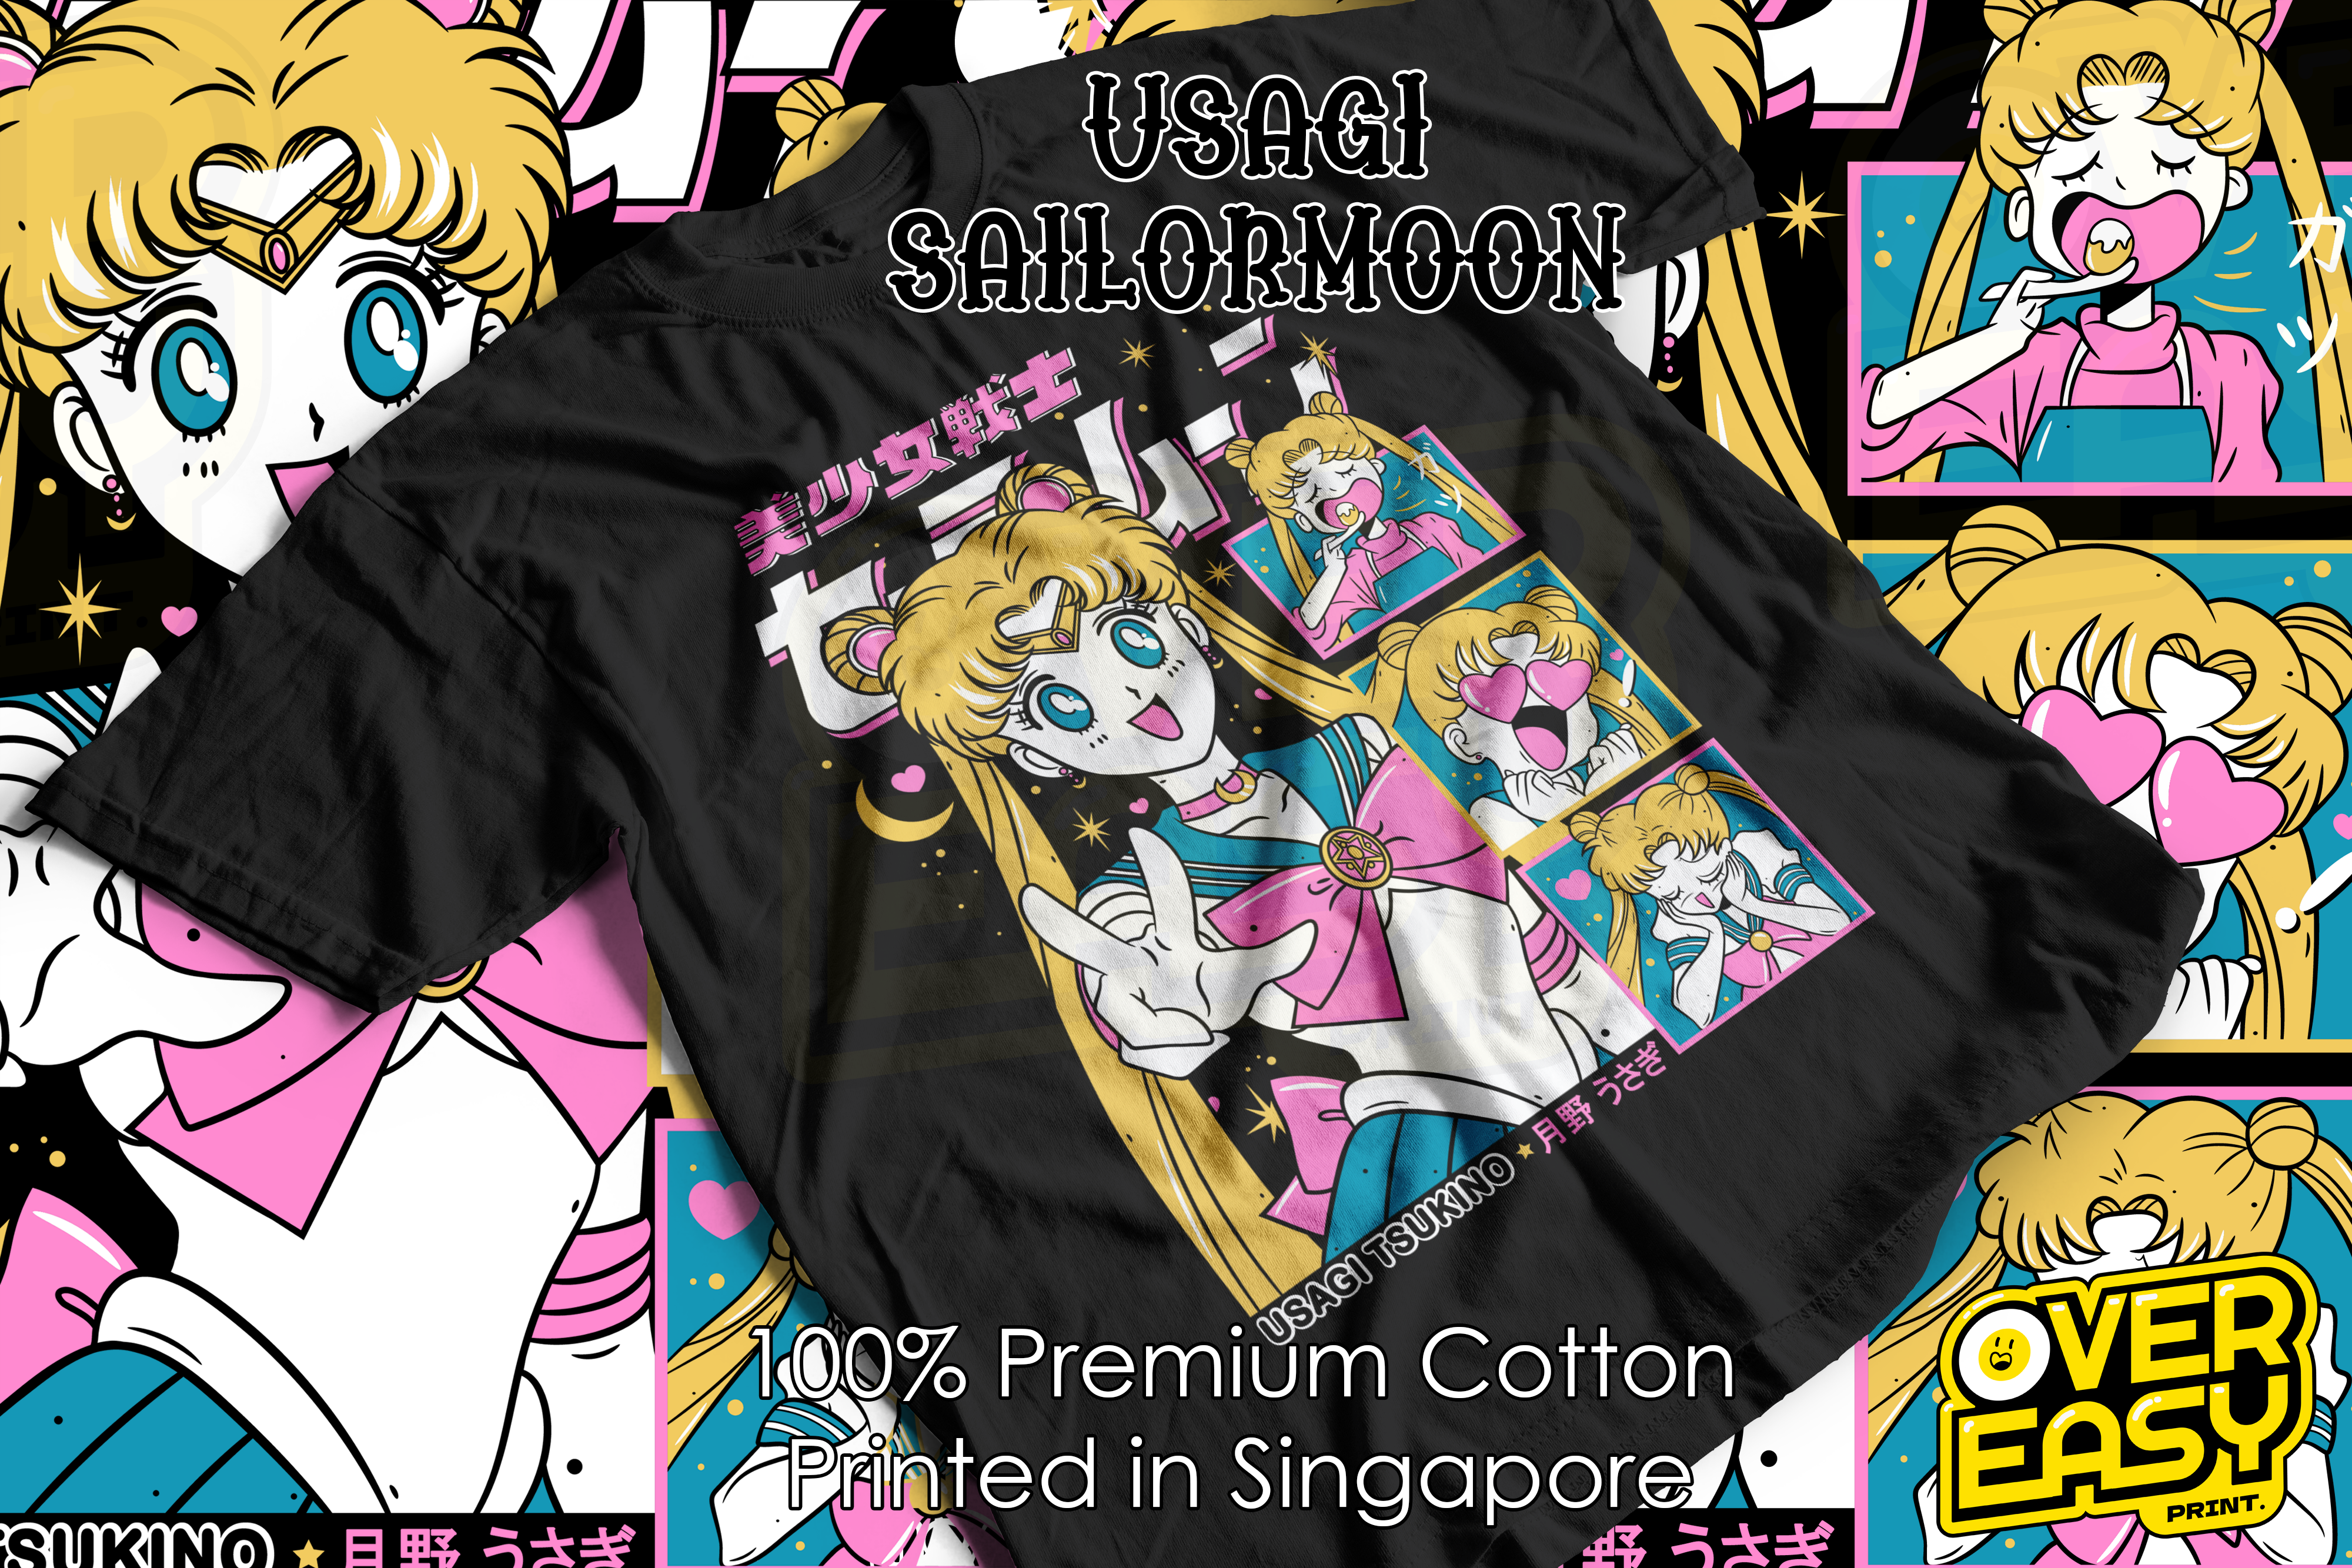 Usagi Sailormoon Fanart T-Shirt